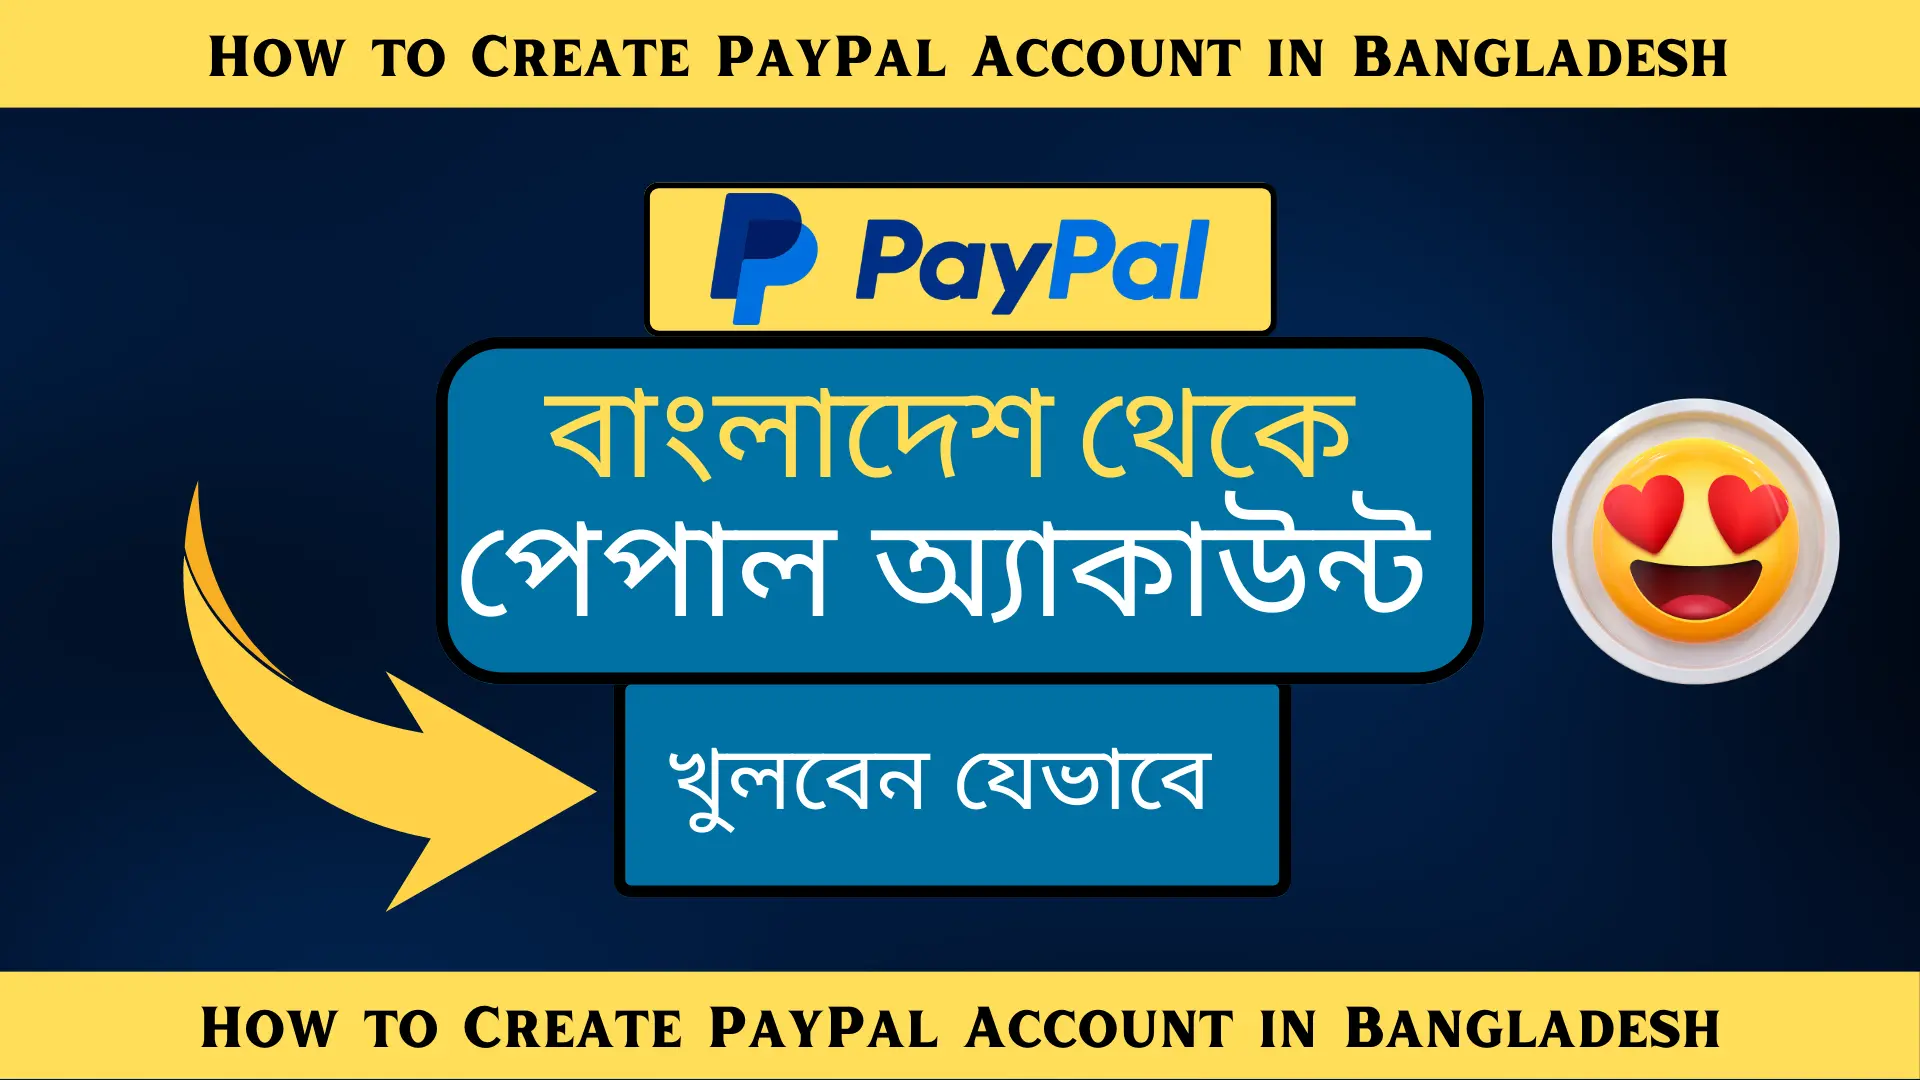 Create Paypal Account in Bangladesh: